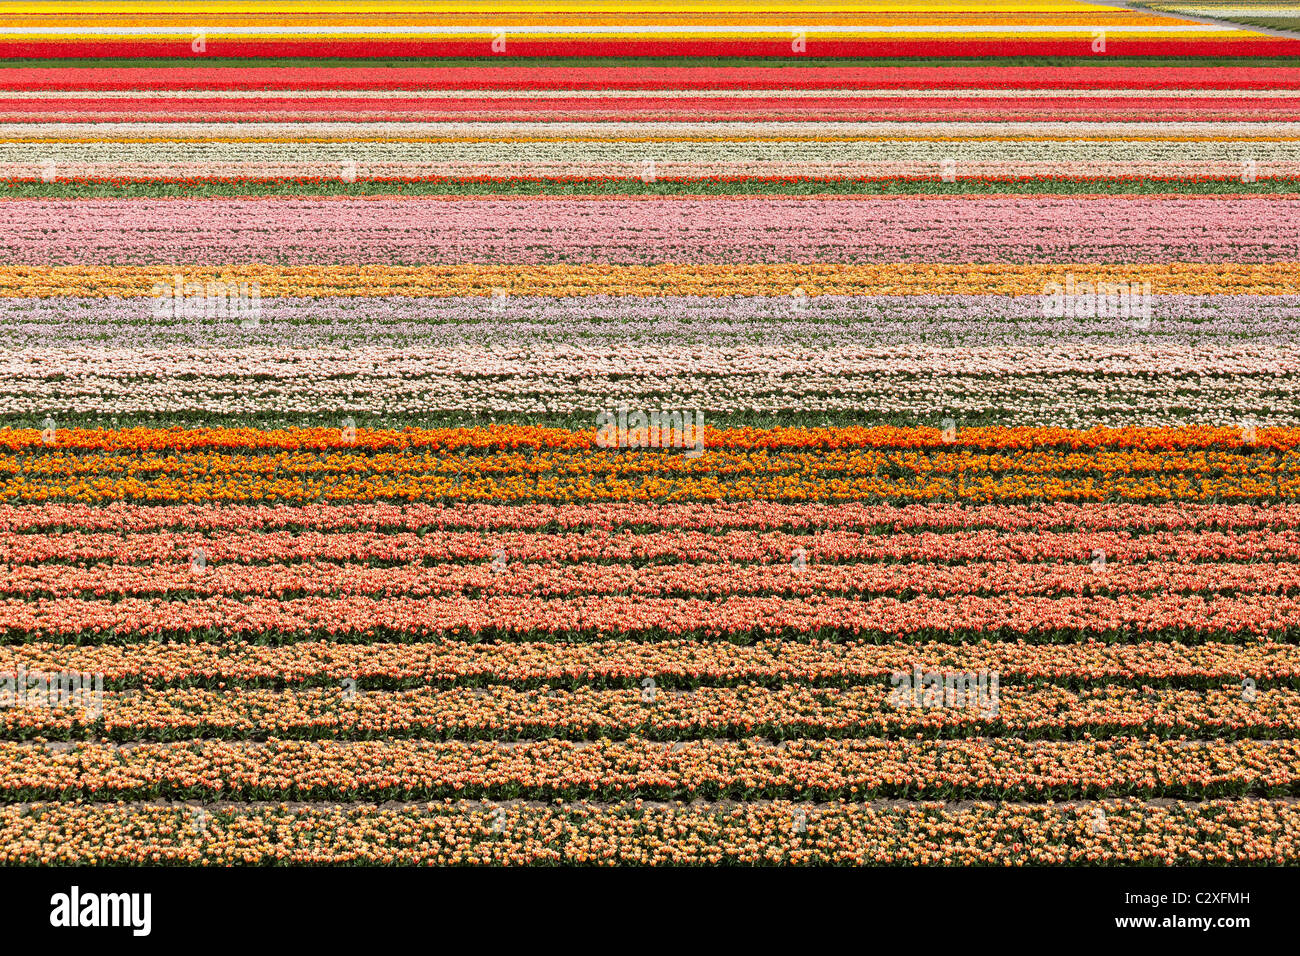 Tulipani olandesi i campi in piena fioritura nei pressi del Keukenhof Flower Garden in Lisse, Holland, Paesi Bassi. Foto Stock